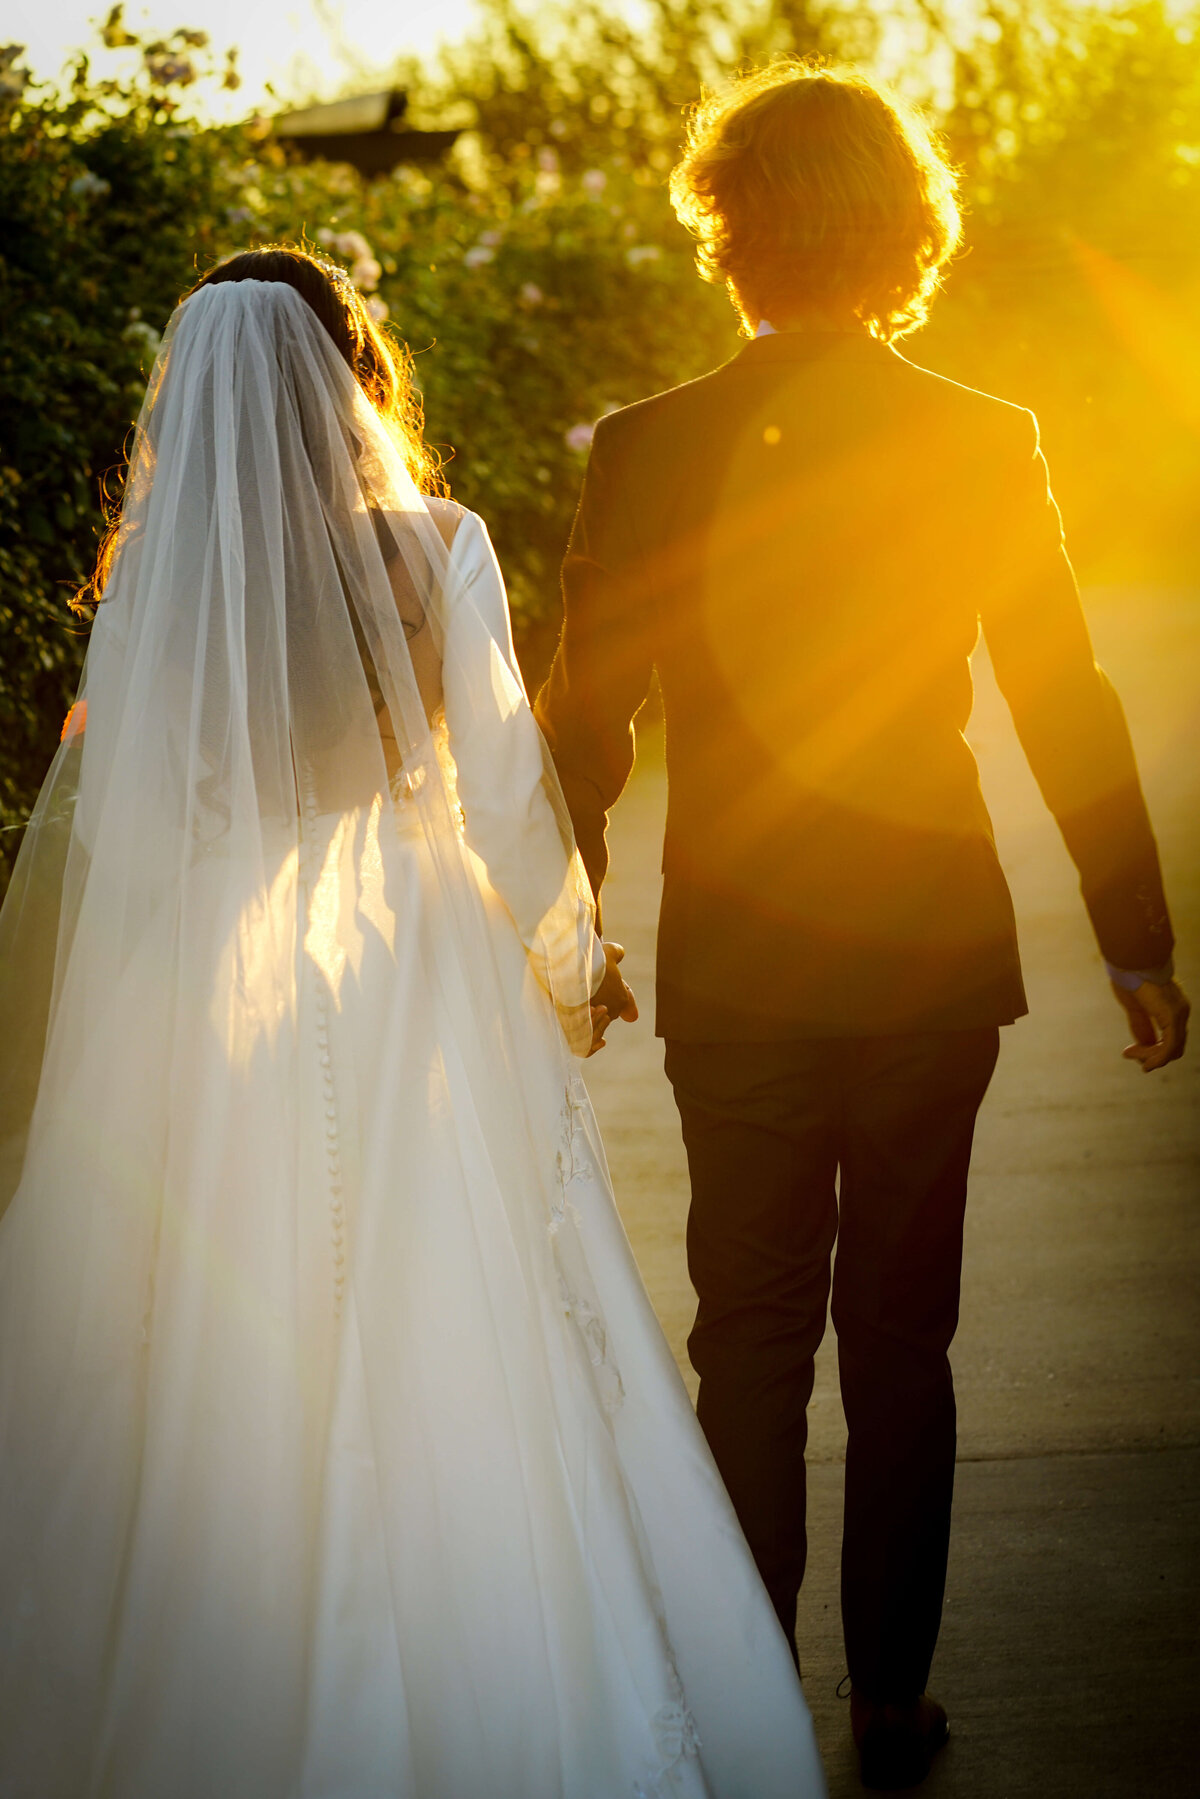 KS-Gray-Photography-newport-beach-wedding-photographer-wedding-couple-walking-in-sunset